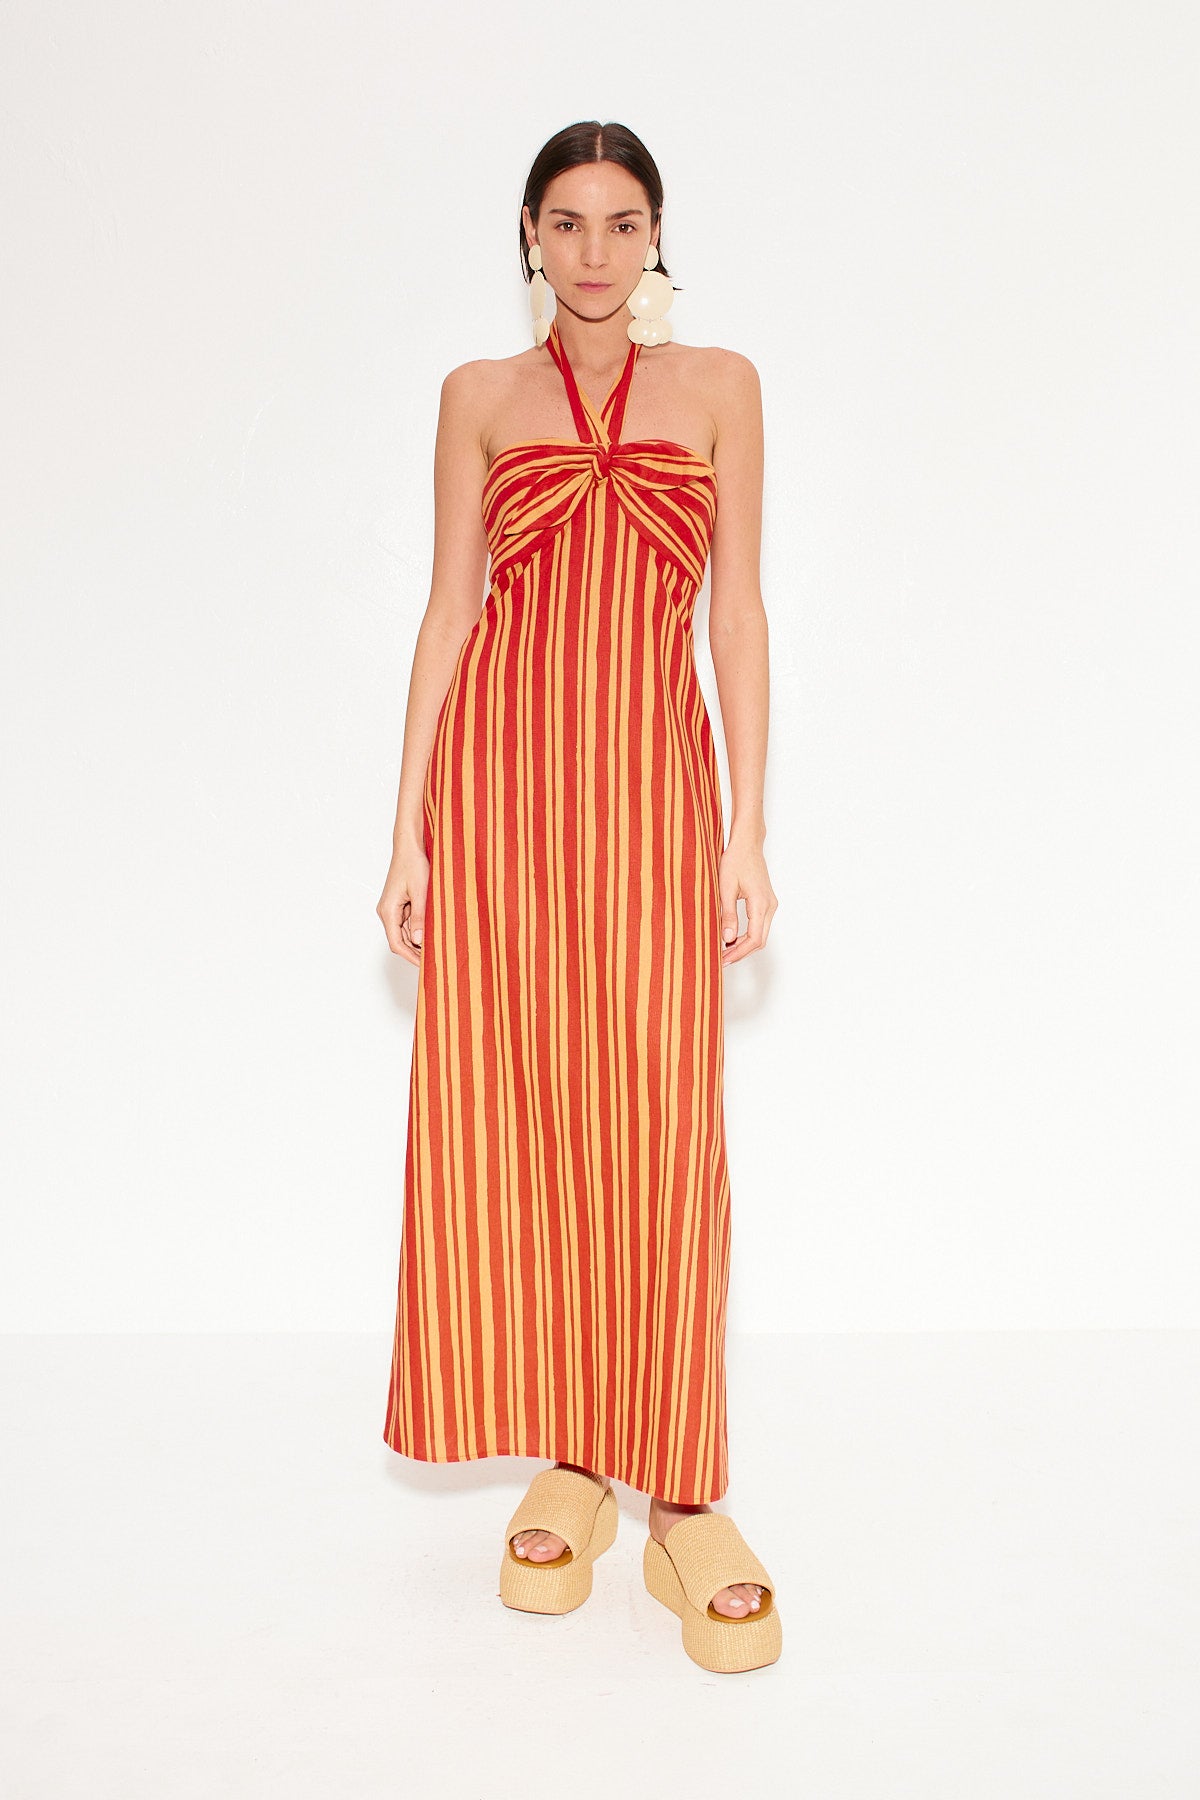 Del Linen Dress in Retro Red Orange Stripe